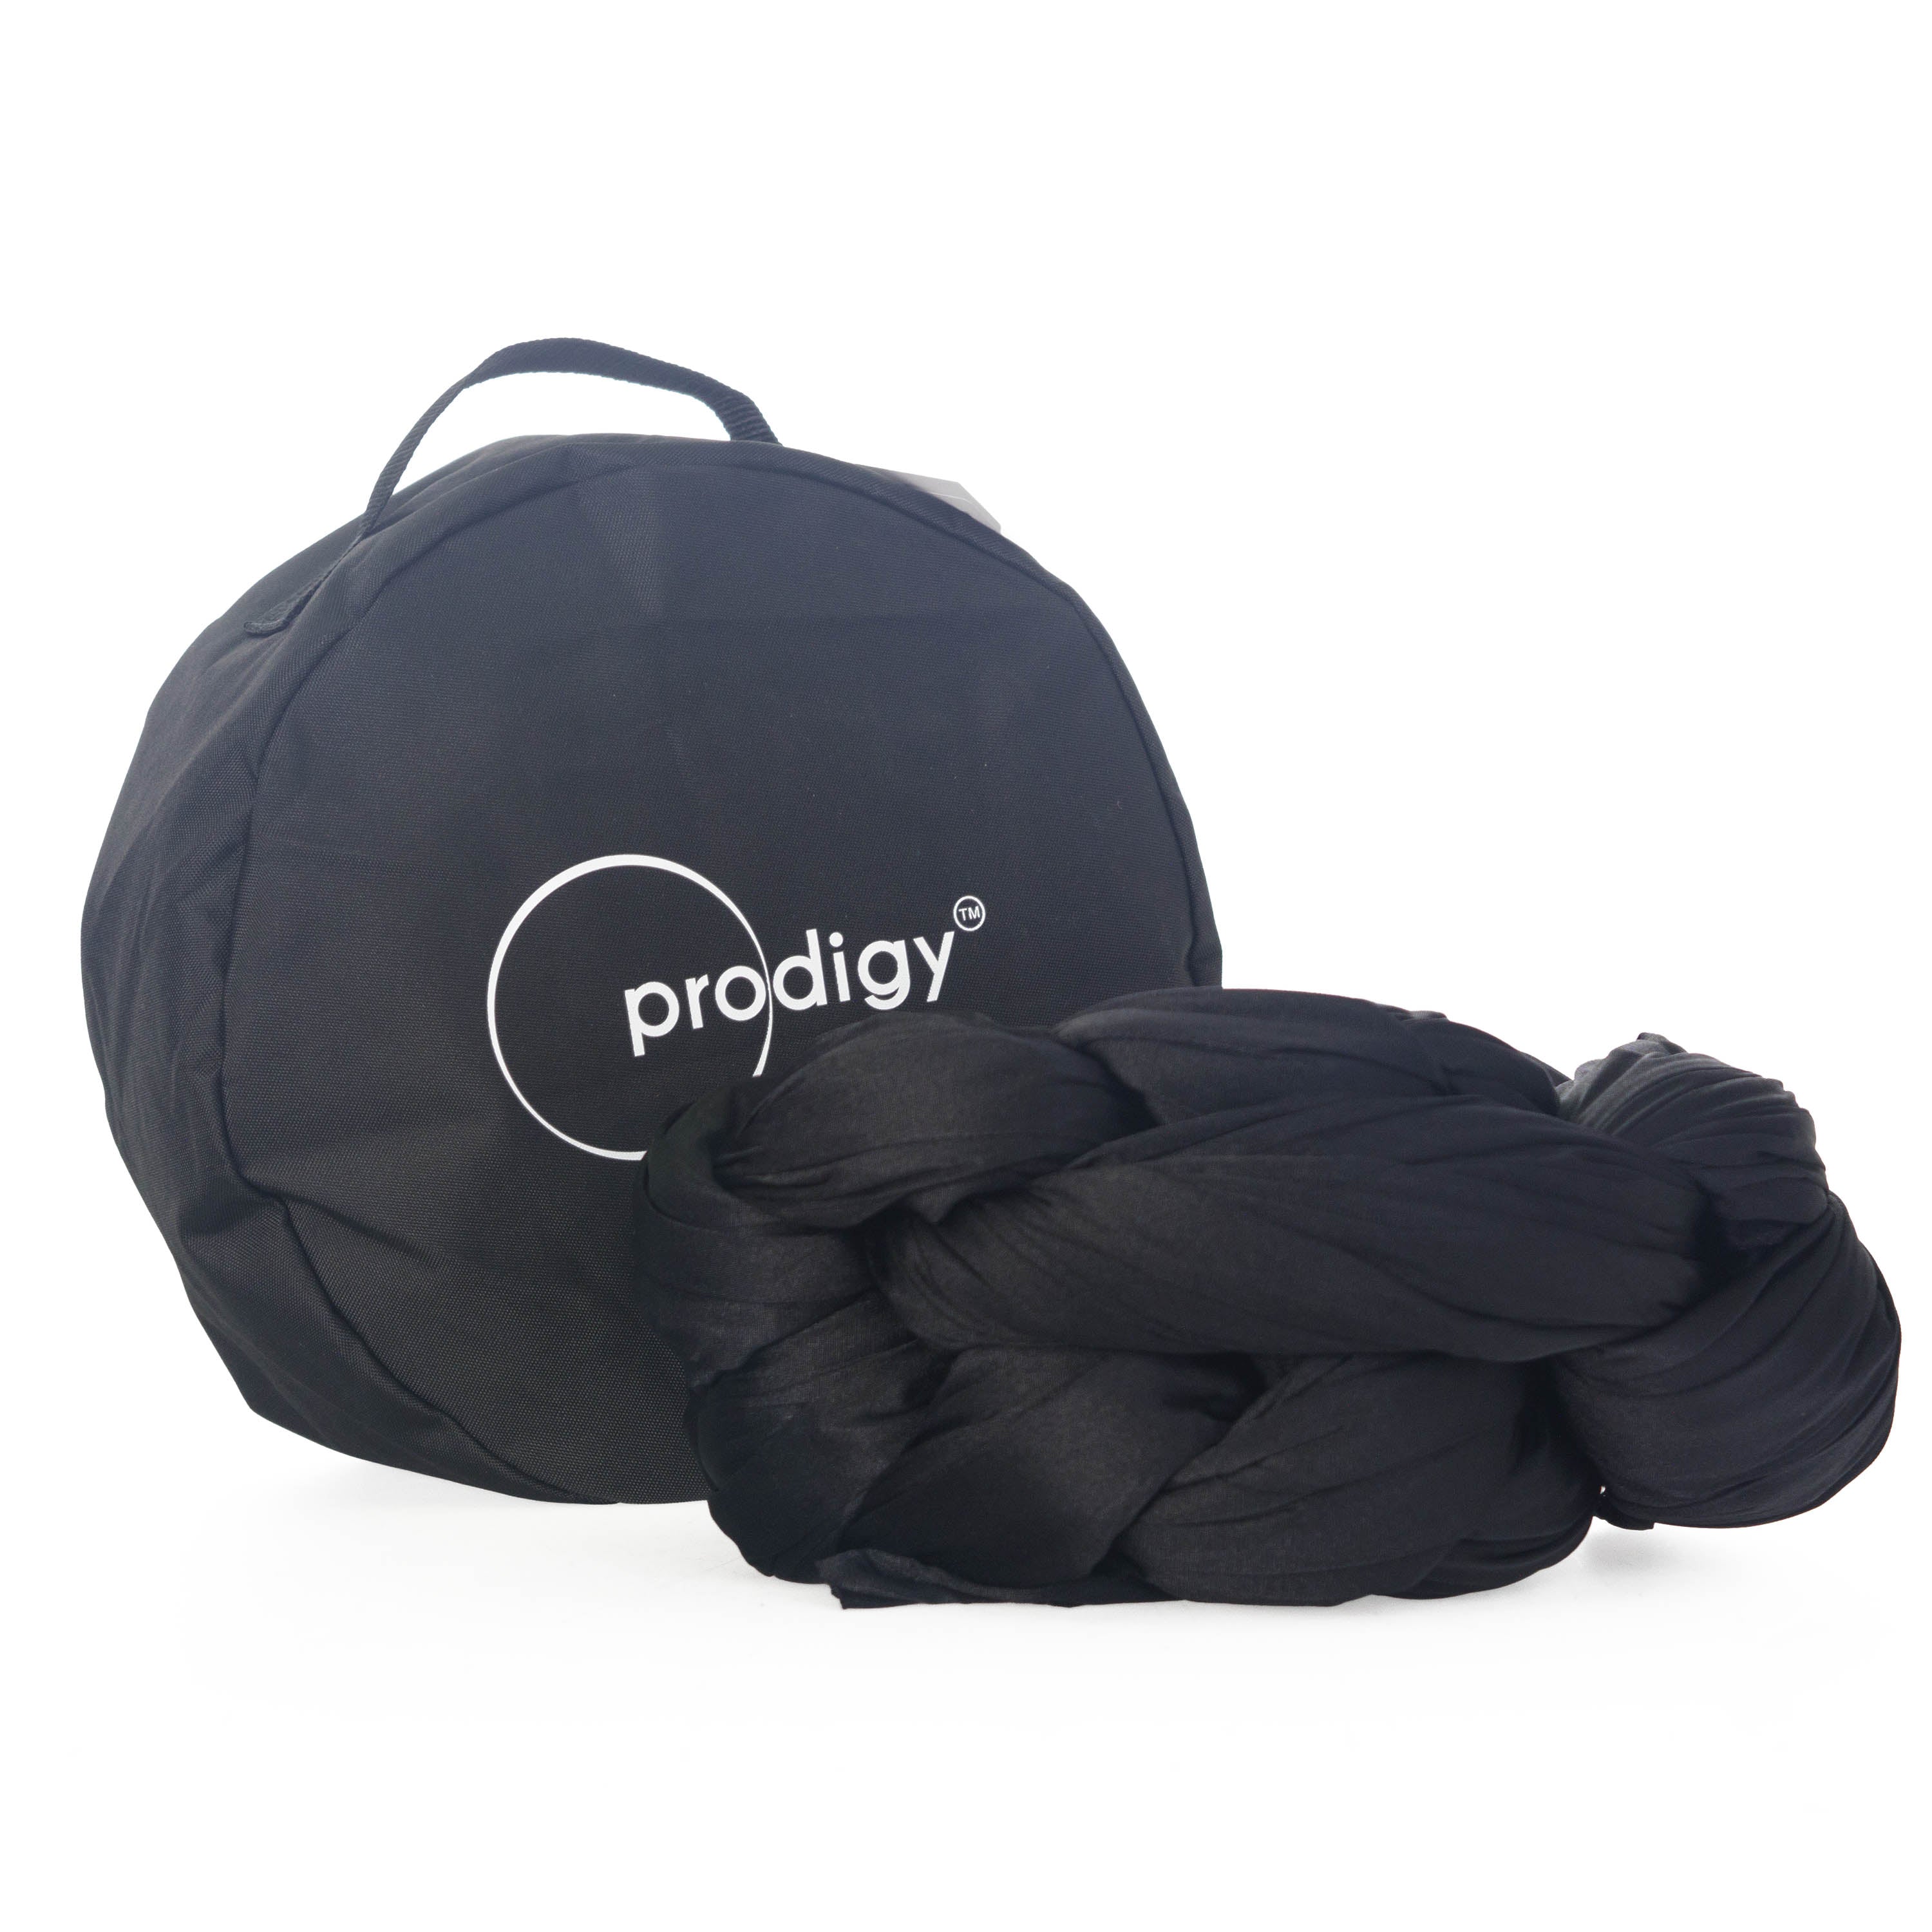 Black Prodigy hammock tied next to bag